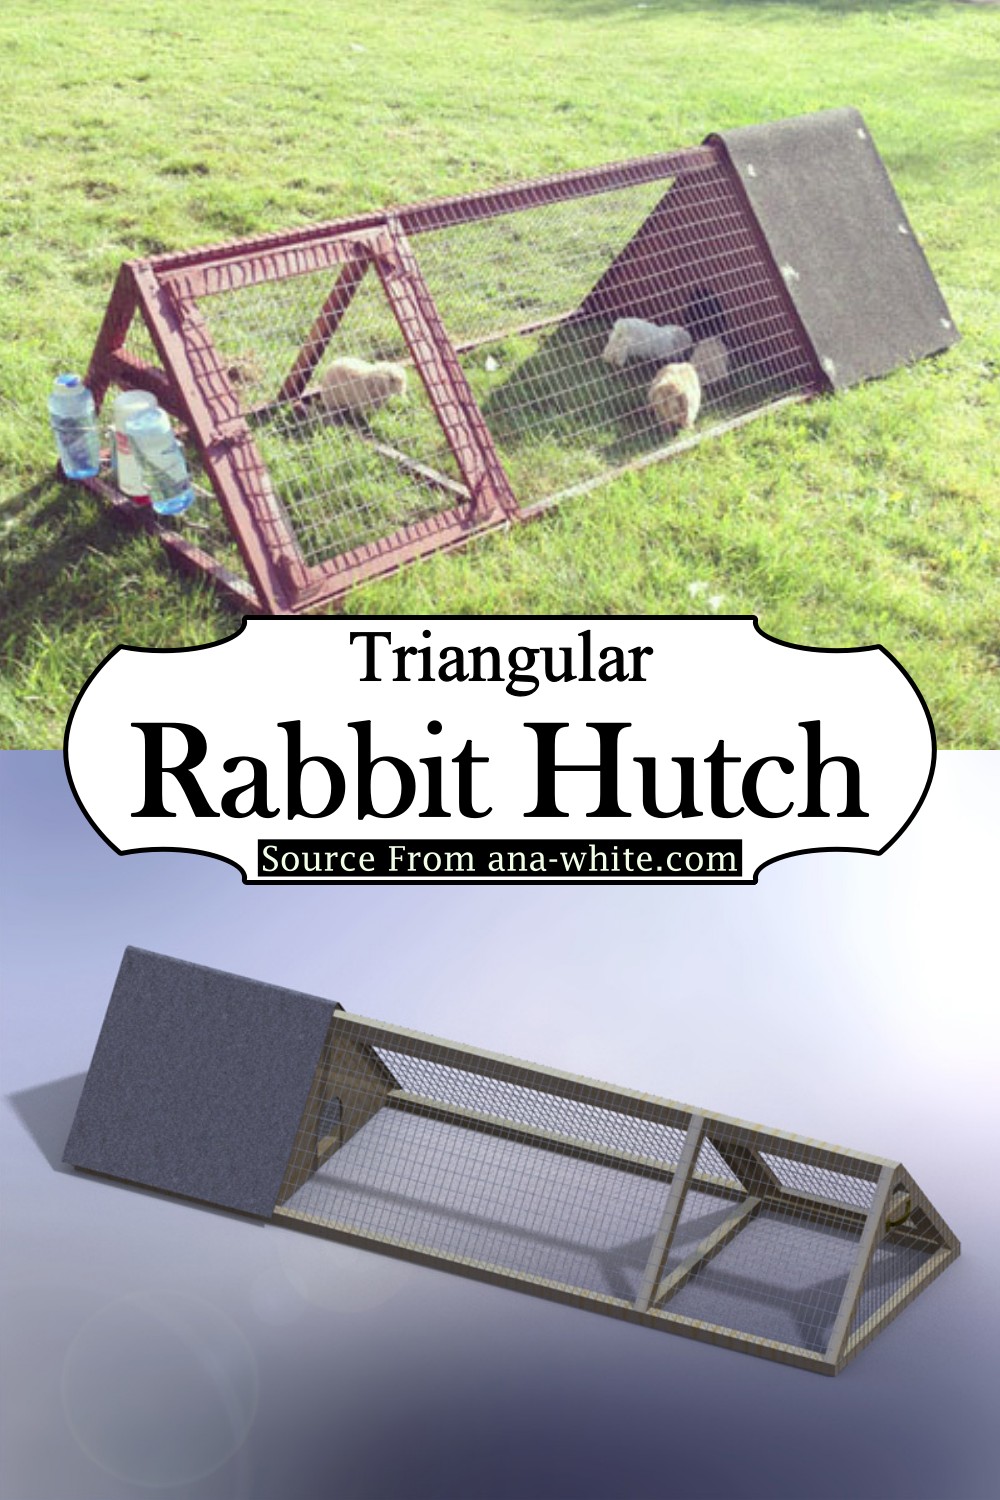 Triangular Rabbit Hutch: